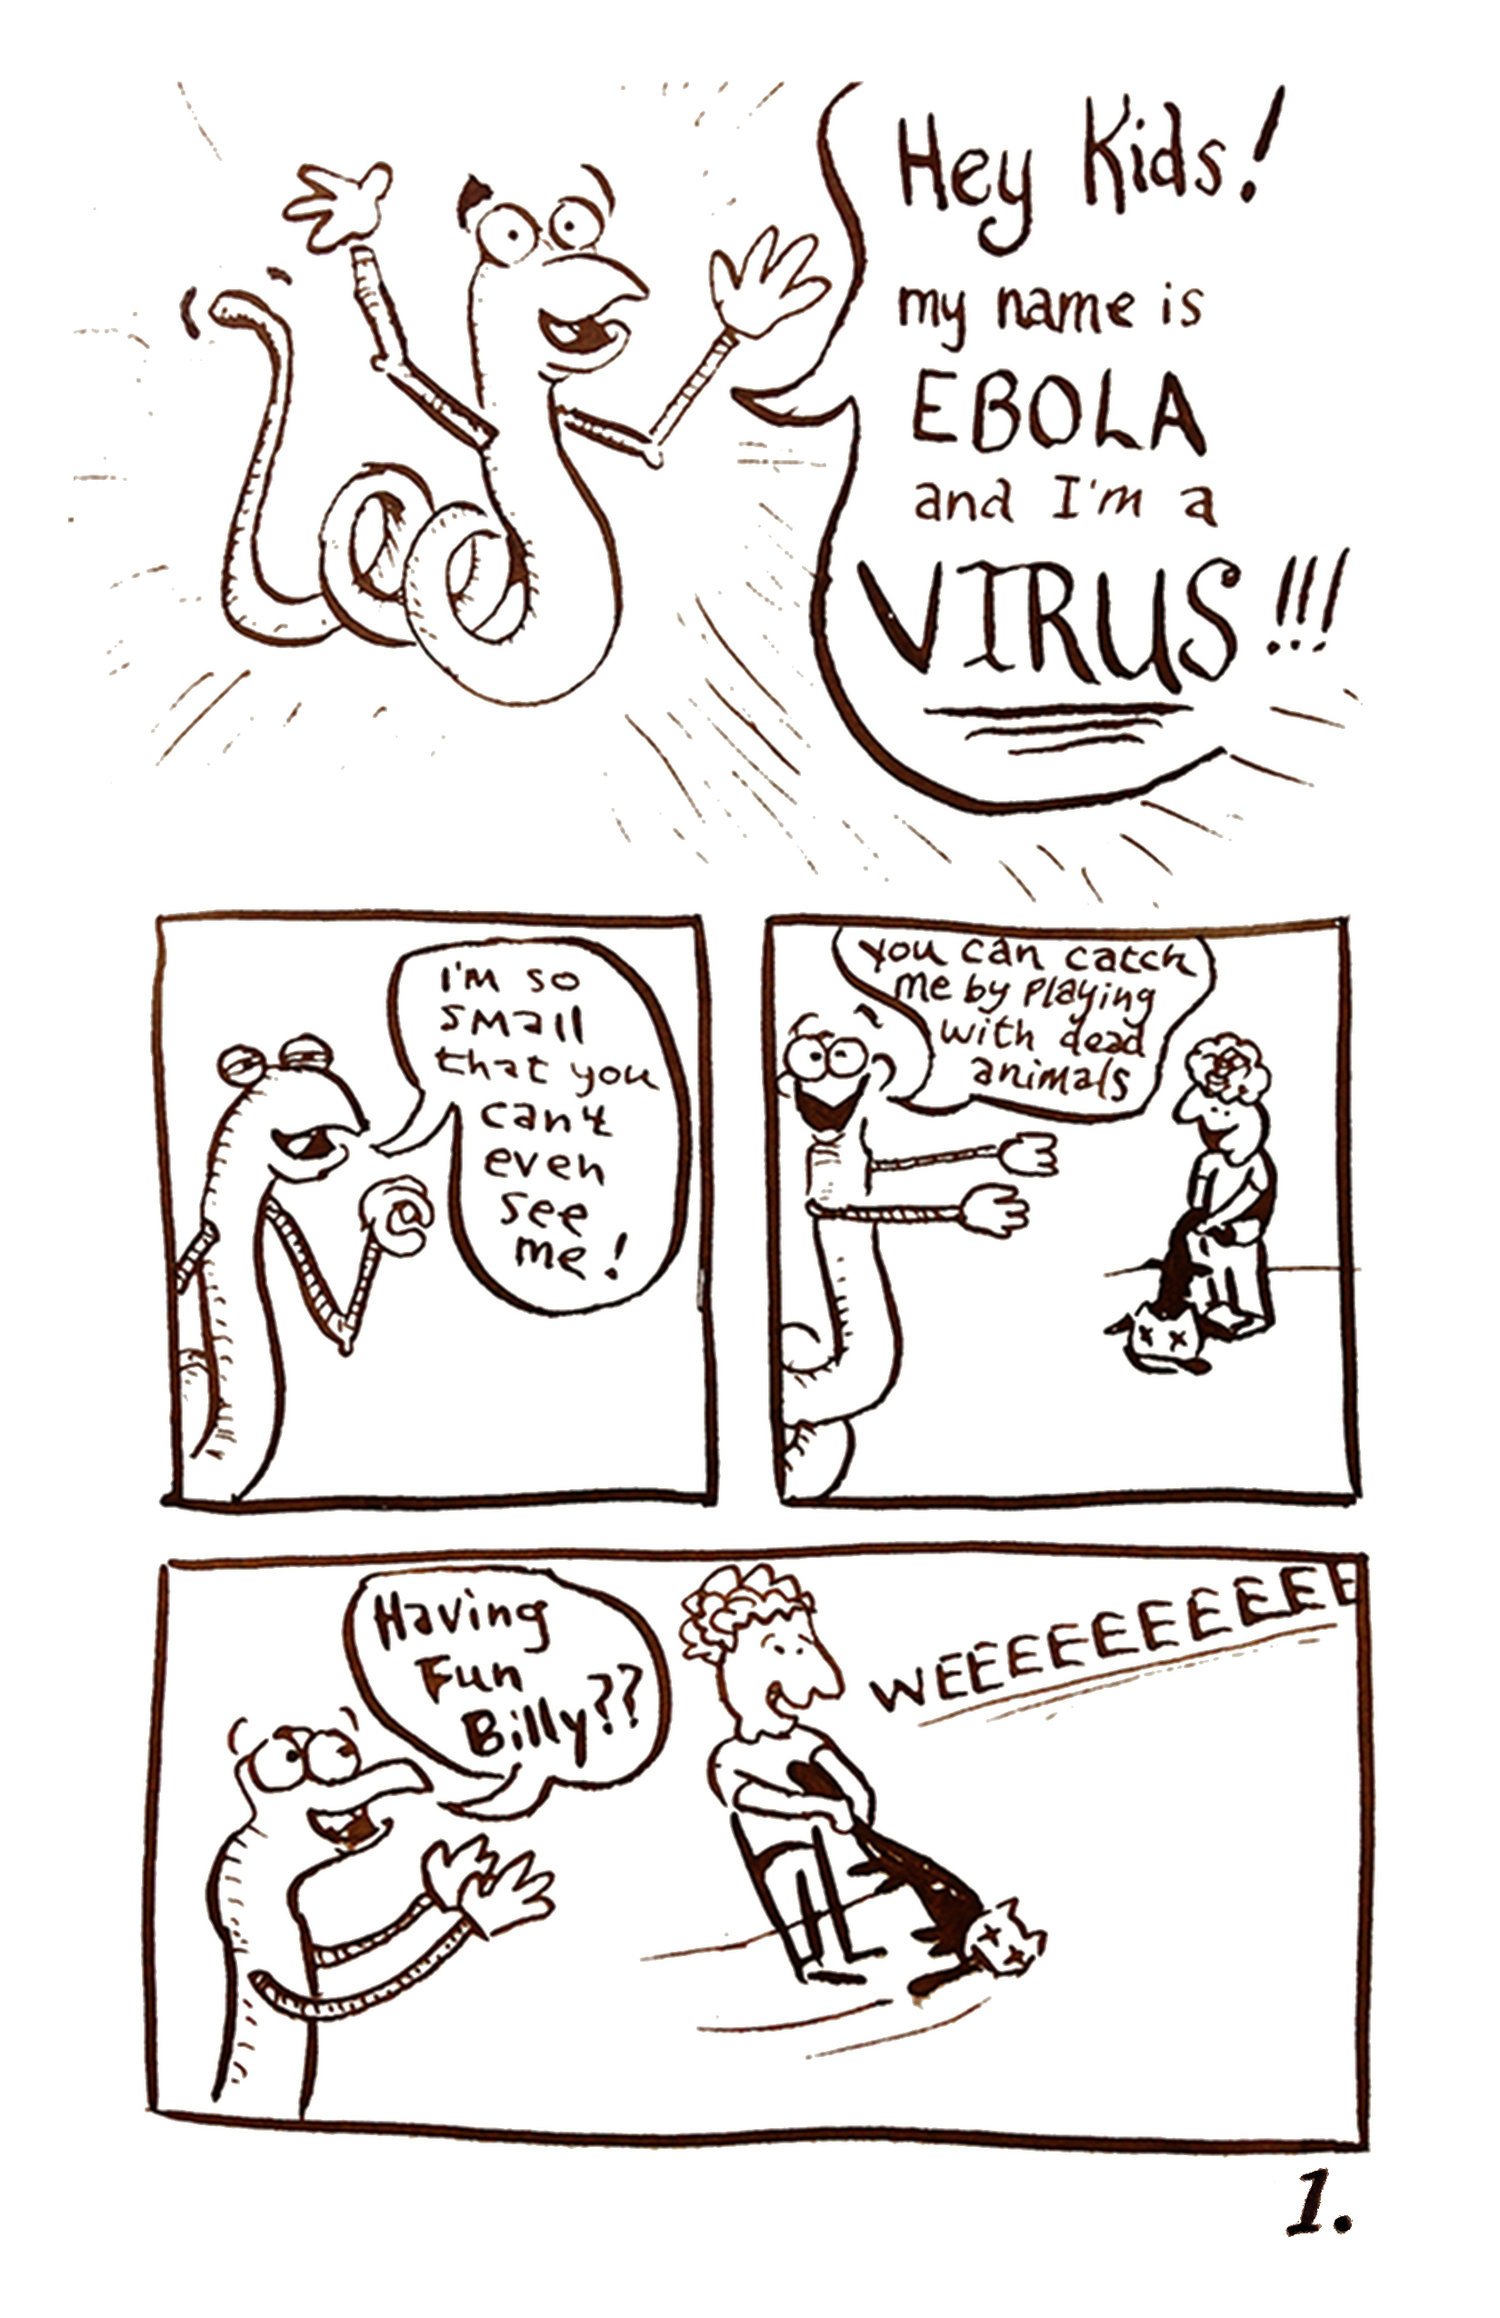 Meet-Ebola-page-1.jpg